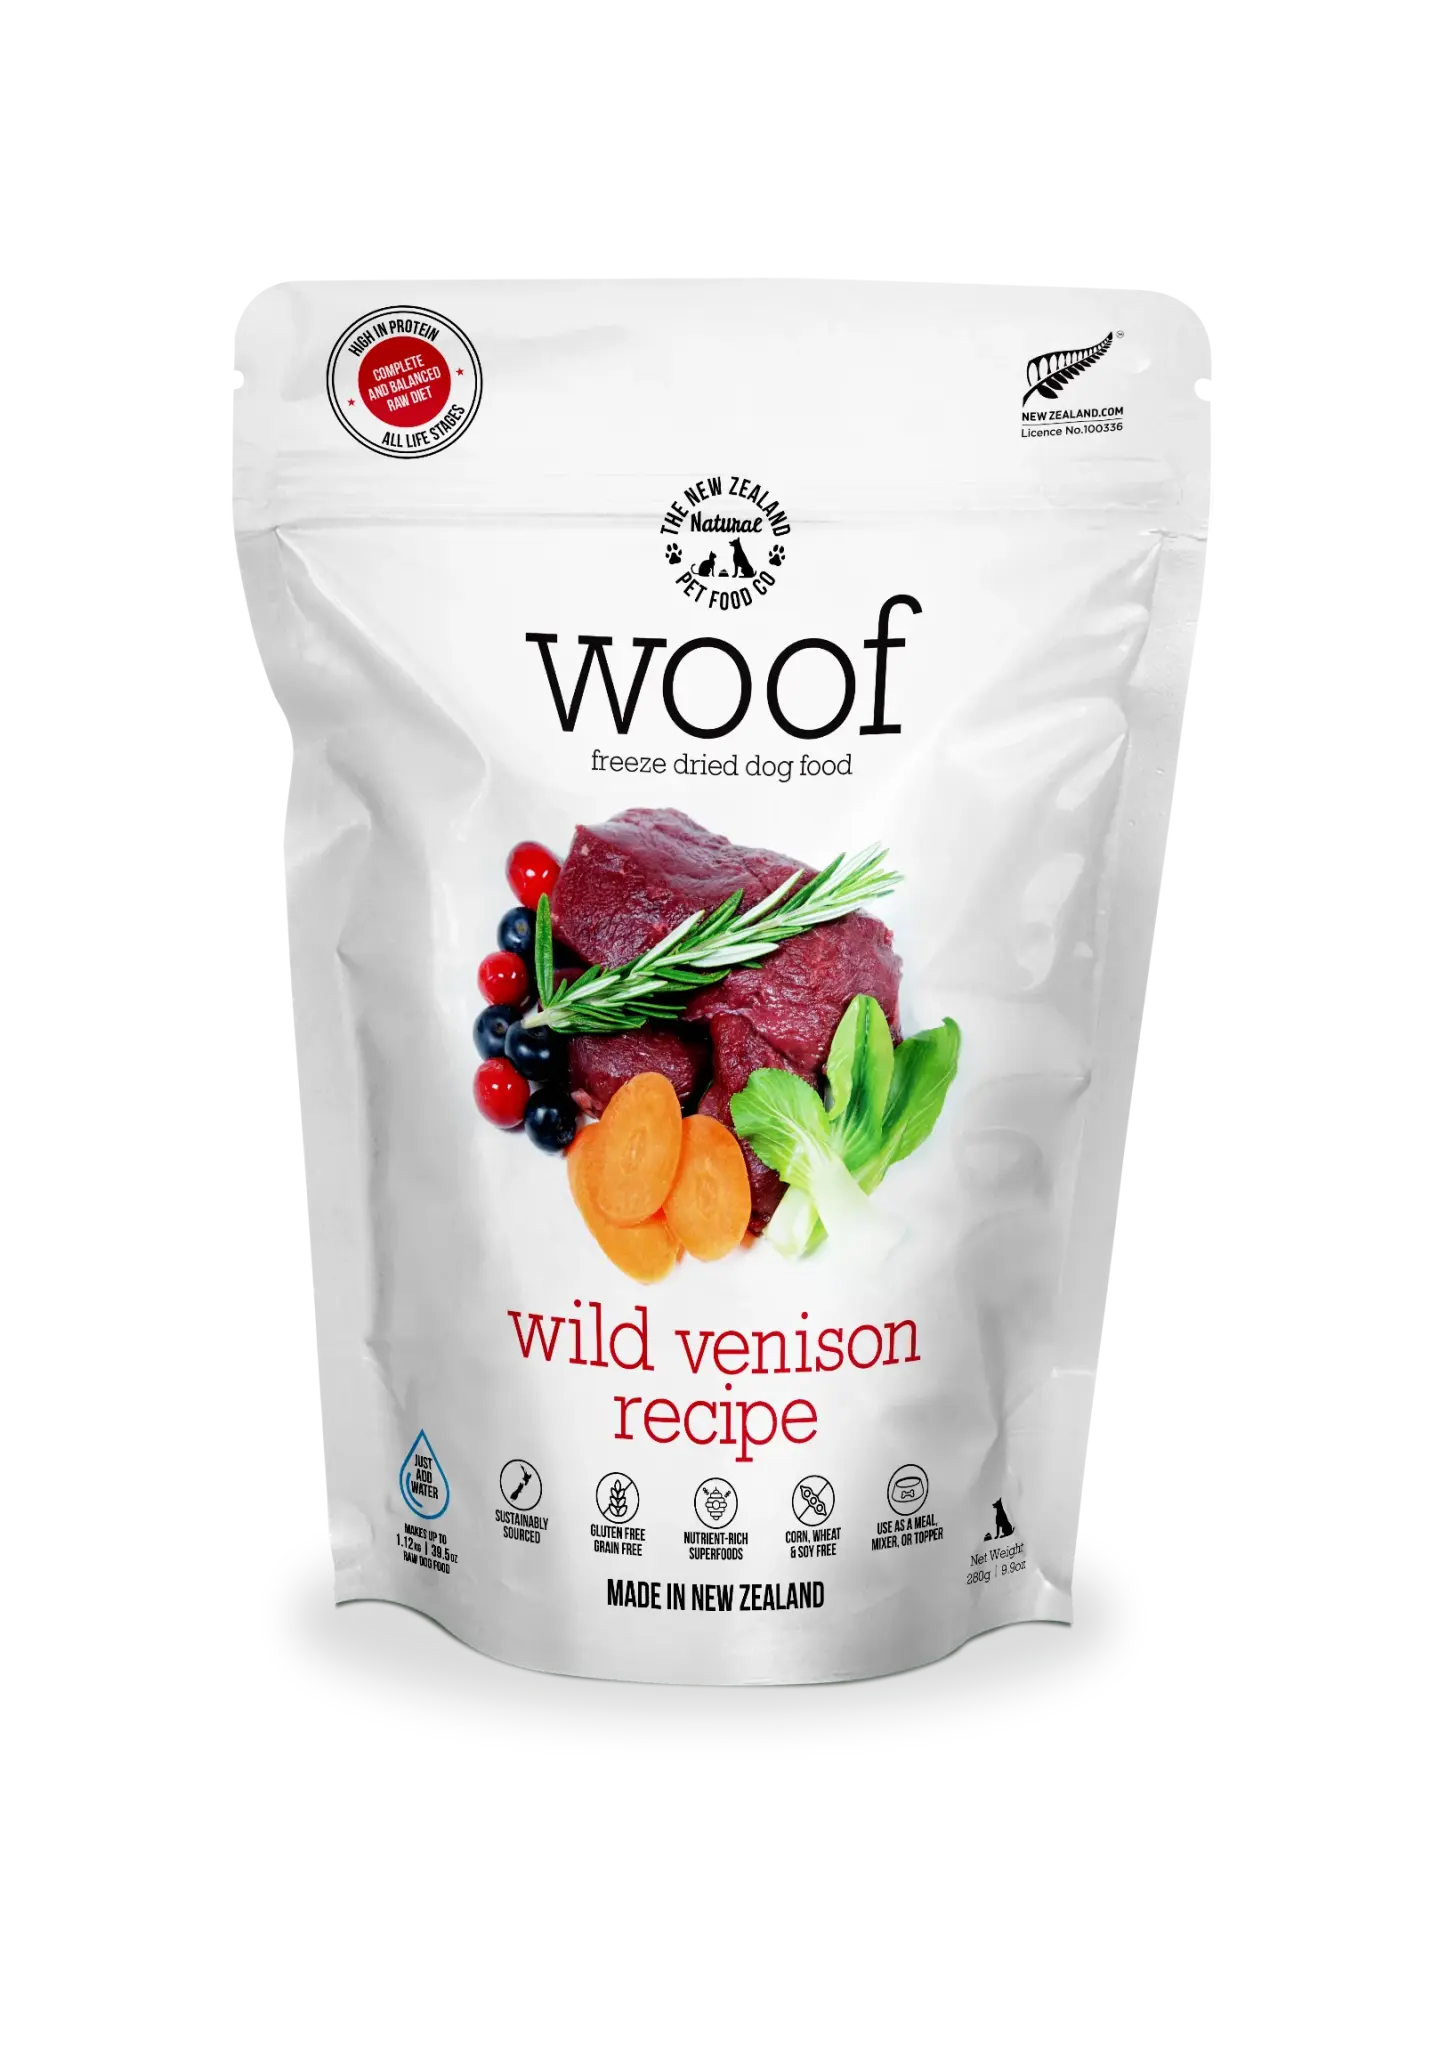 The New Zealand Natural Pet Food Company New Zealand Natural- Woof Wild Venison 9.9oz